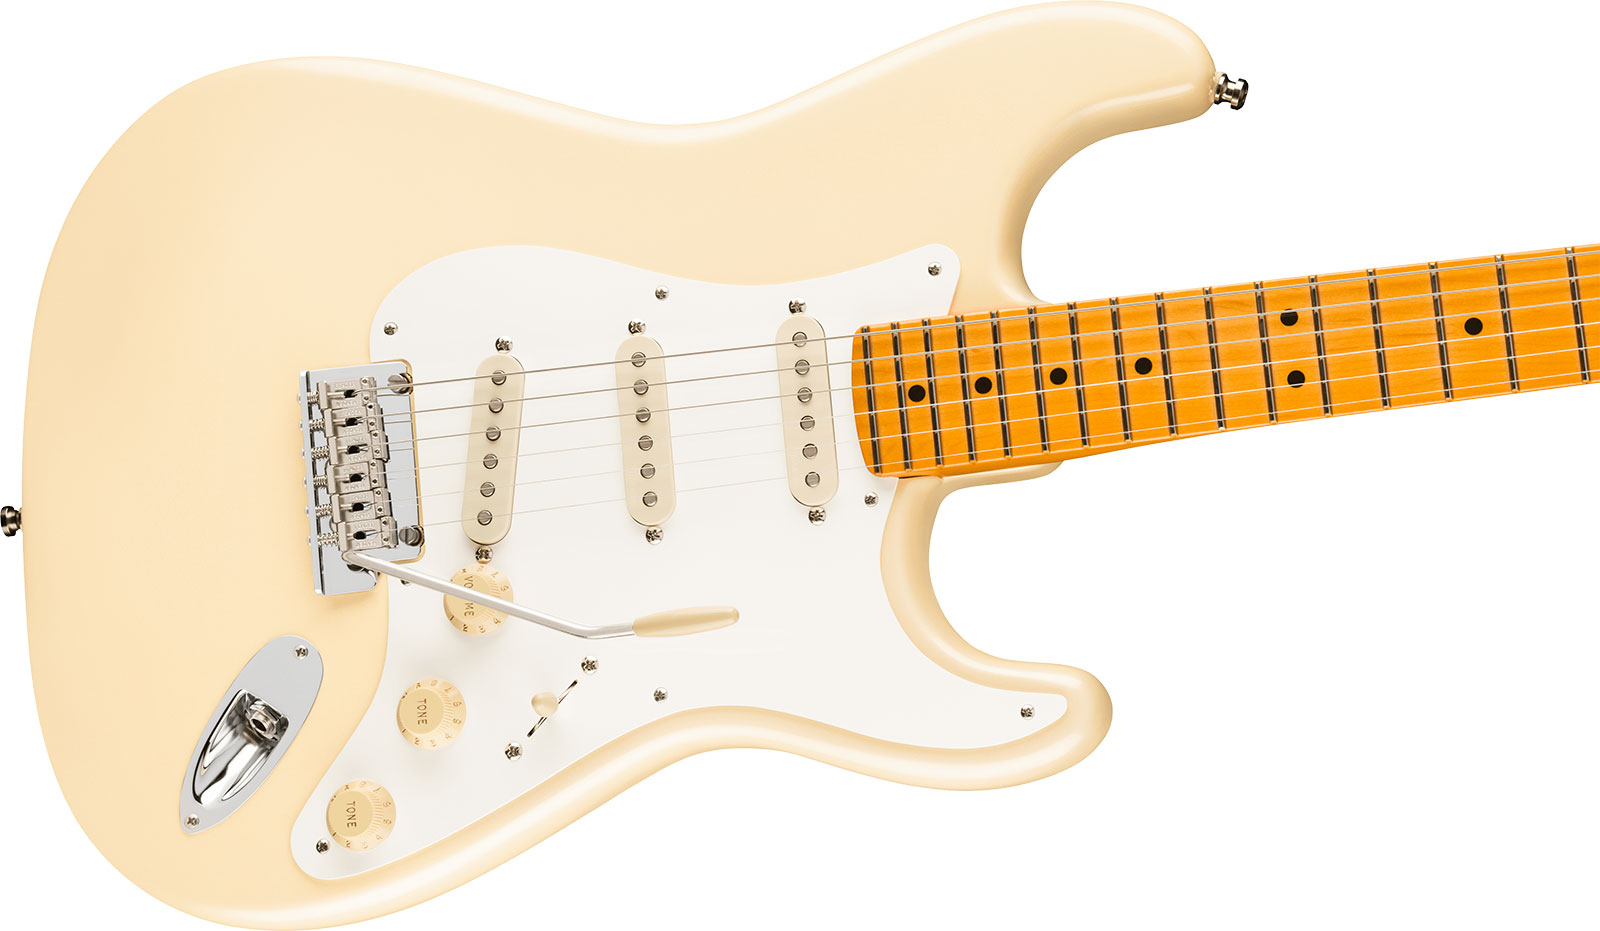 Fender Lincoln Brewster Strat Usa Signature 3s Dimarzio Trem Mn - Olympic Pearl - Retro-rock elektrische gitaar - Variation 2